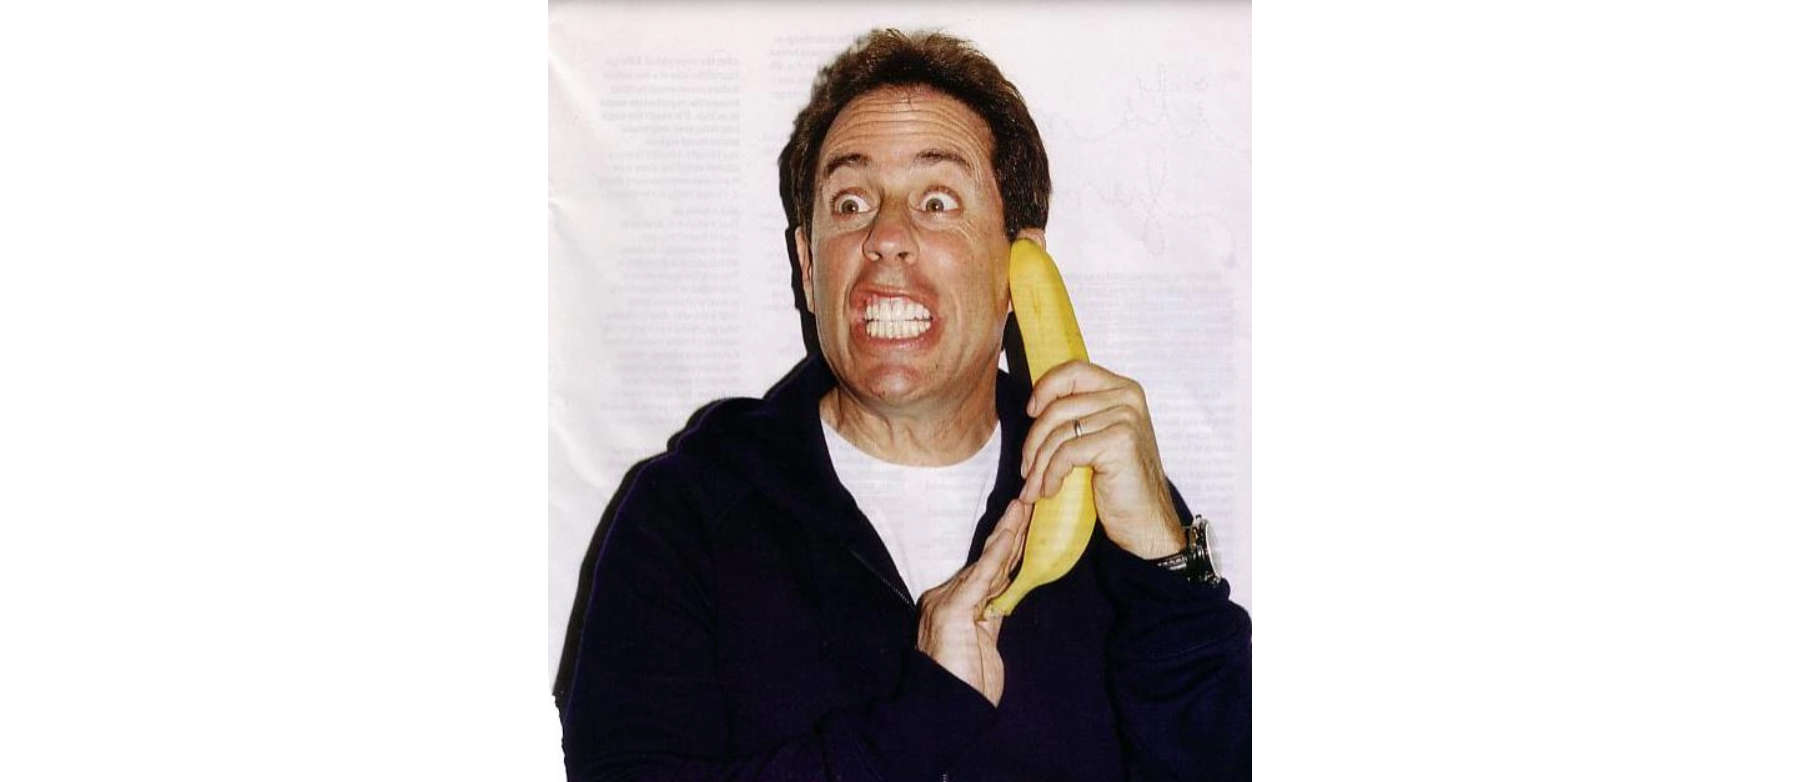 Seinfeld banana ear Burlington facebook twiiter